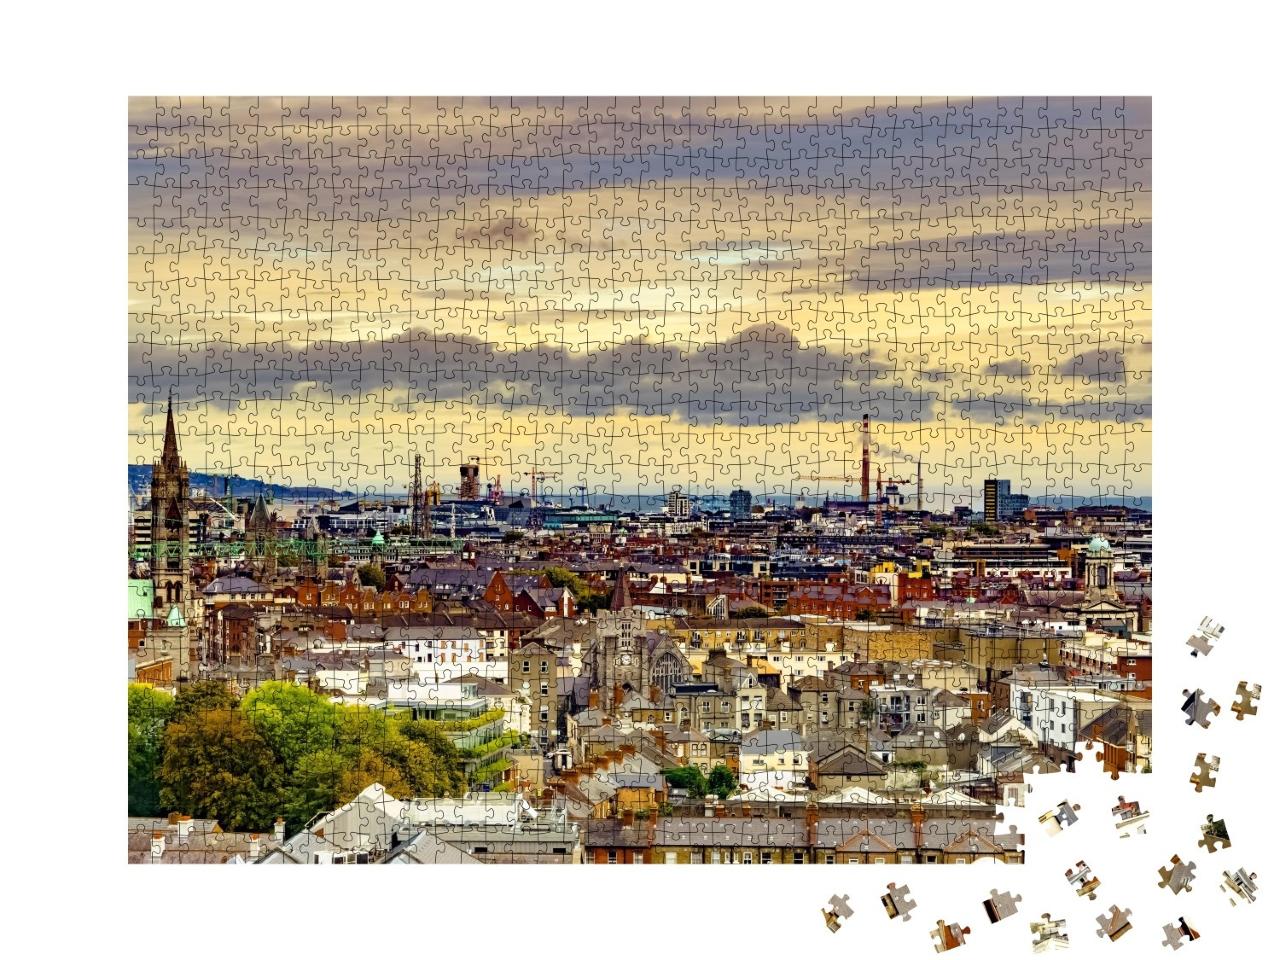 Puzzle de 1000 pièces « Panorama de Dublin, capitale de l'Irlande »